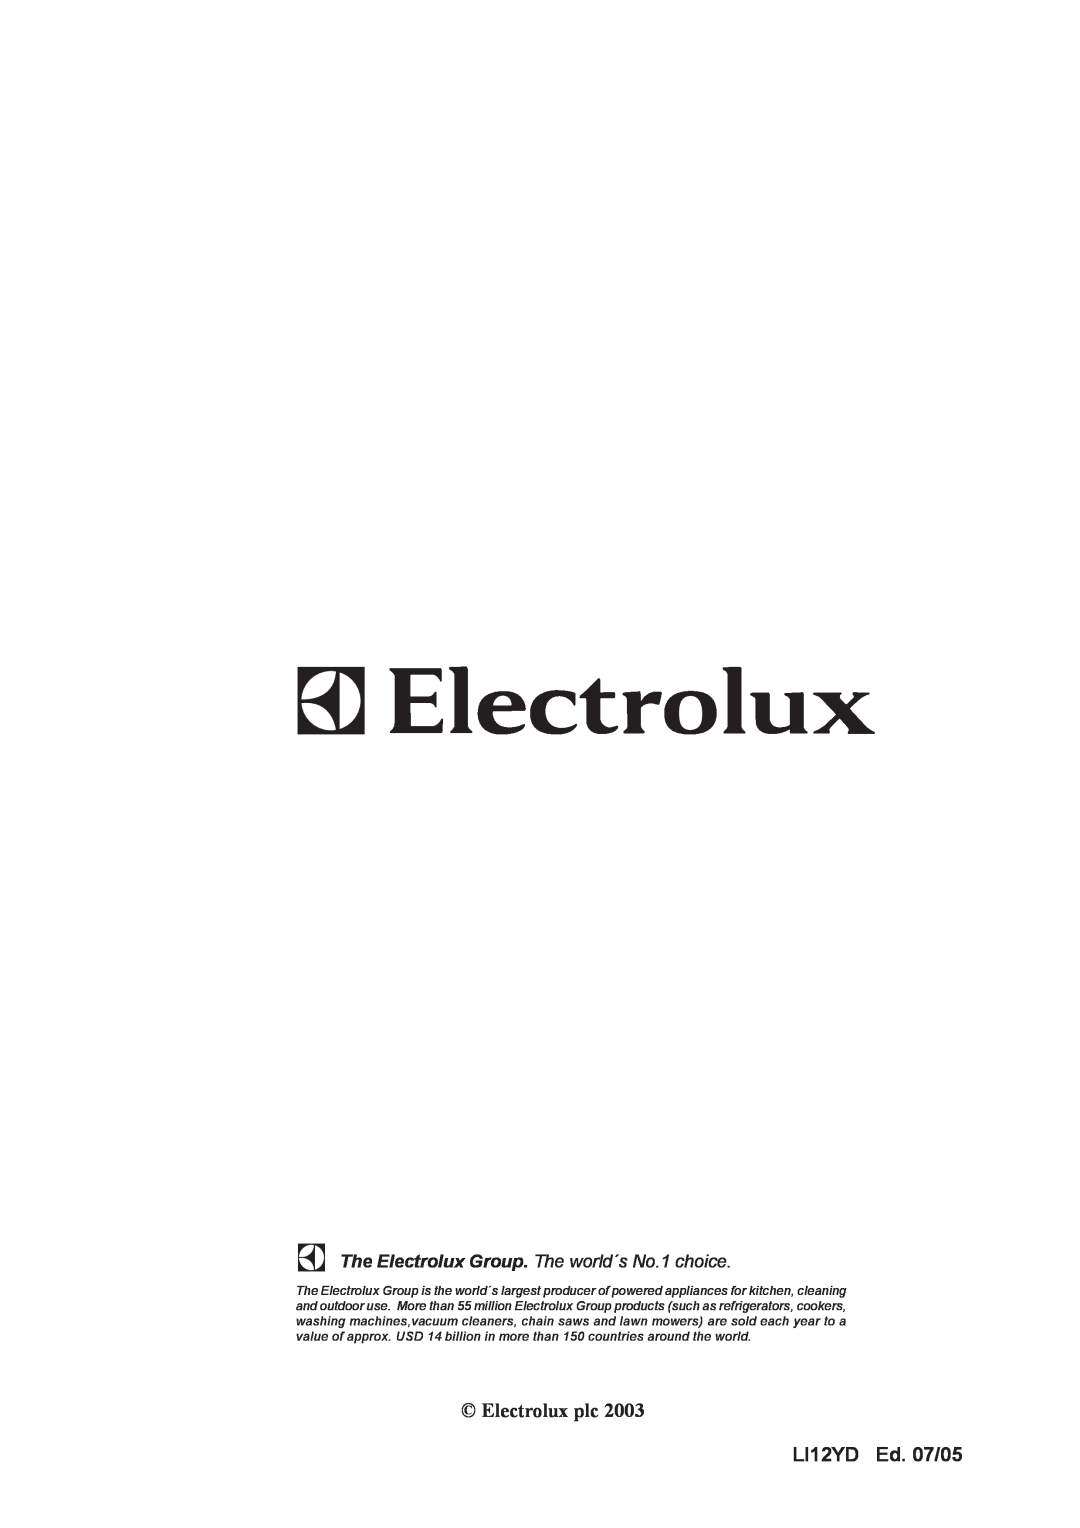 Electrolux CH 700 user manual Electrolux plc LI12YD Ed. 07/05, The Electrolux Group. The world´s No.1 choice 